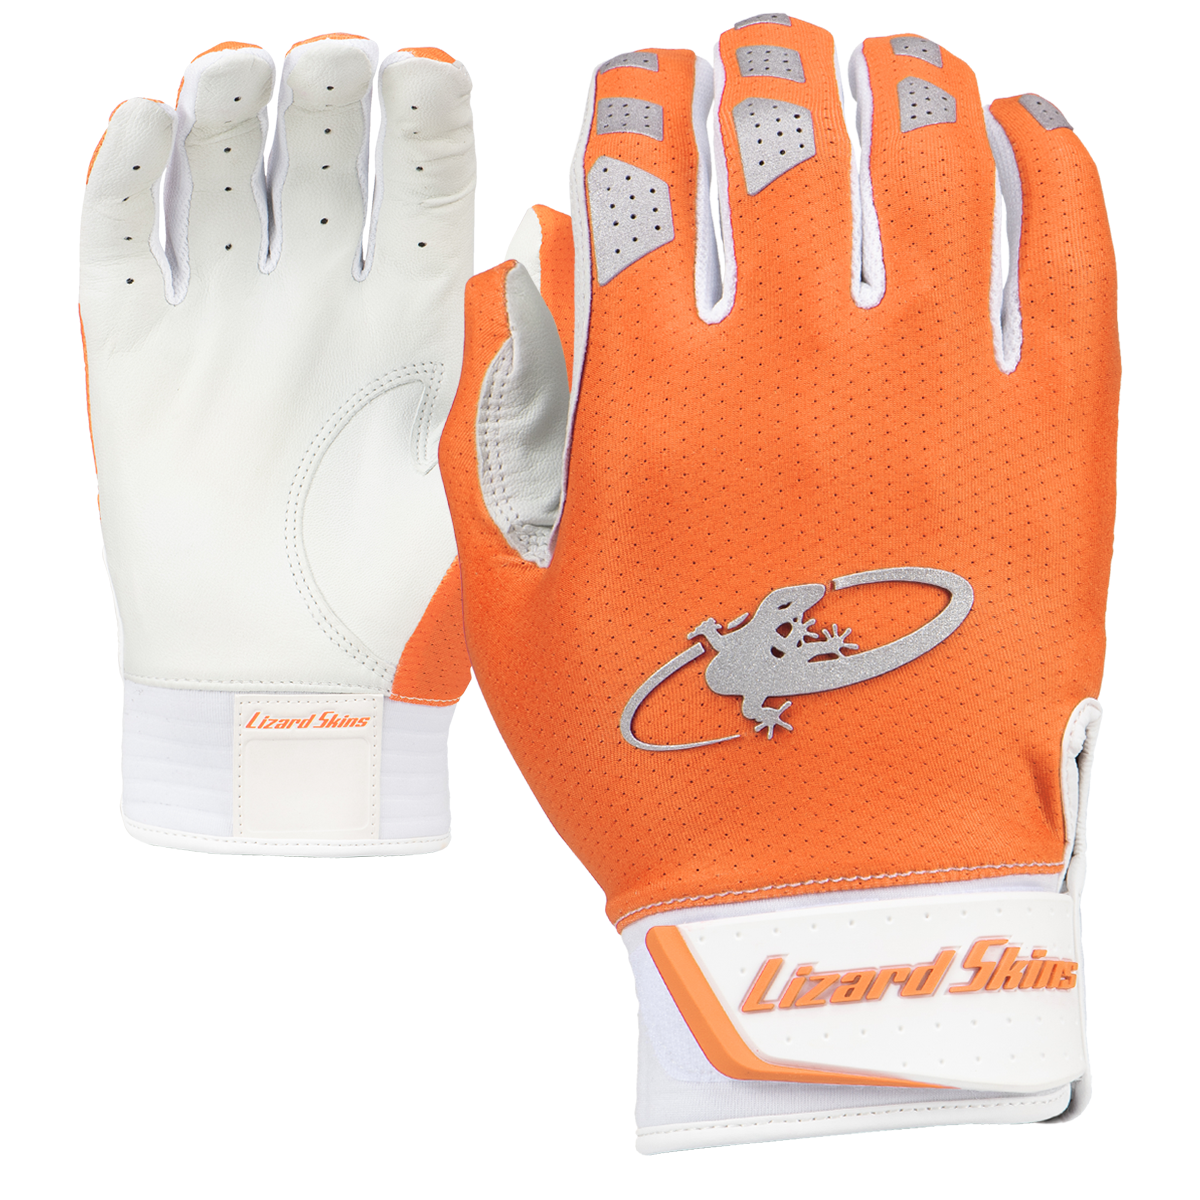 Lizard Skins Komodo V2 Batting Glove - Blaze Orange